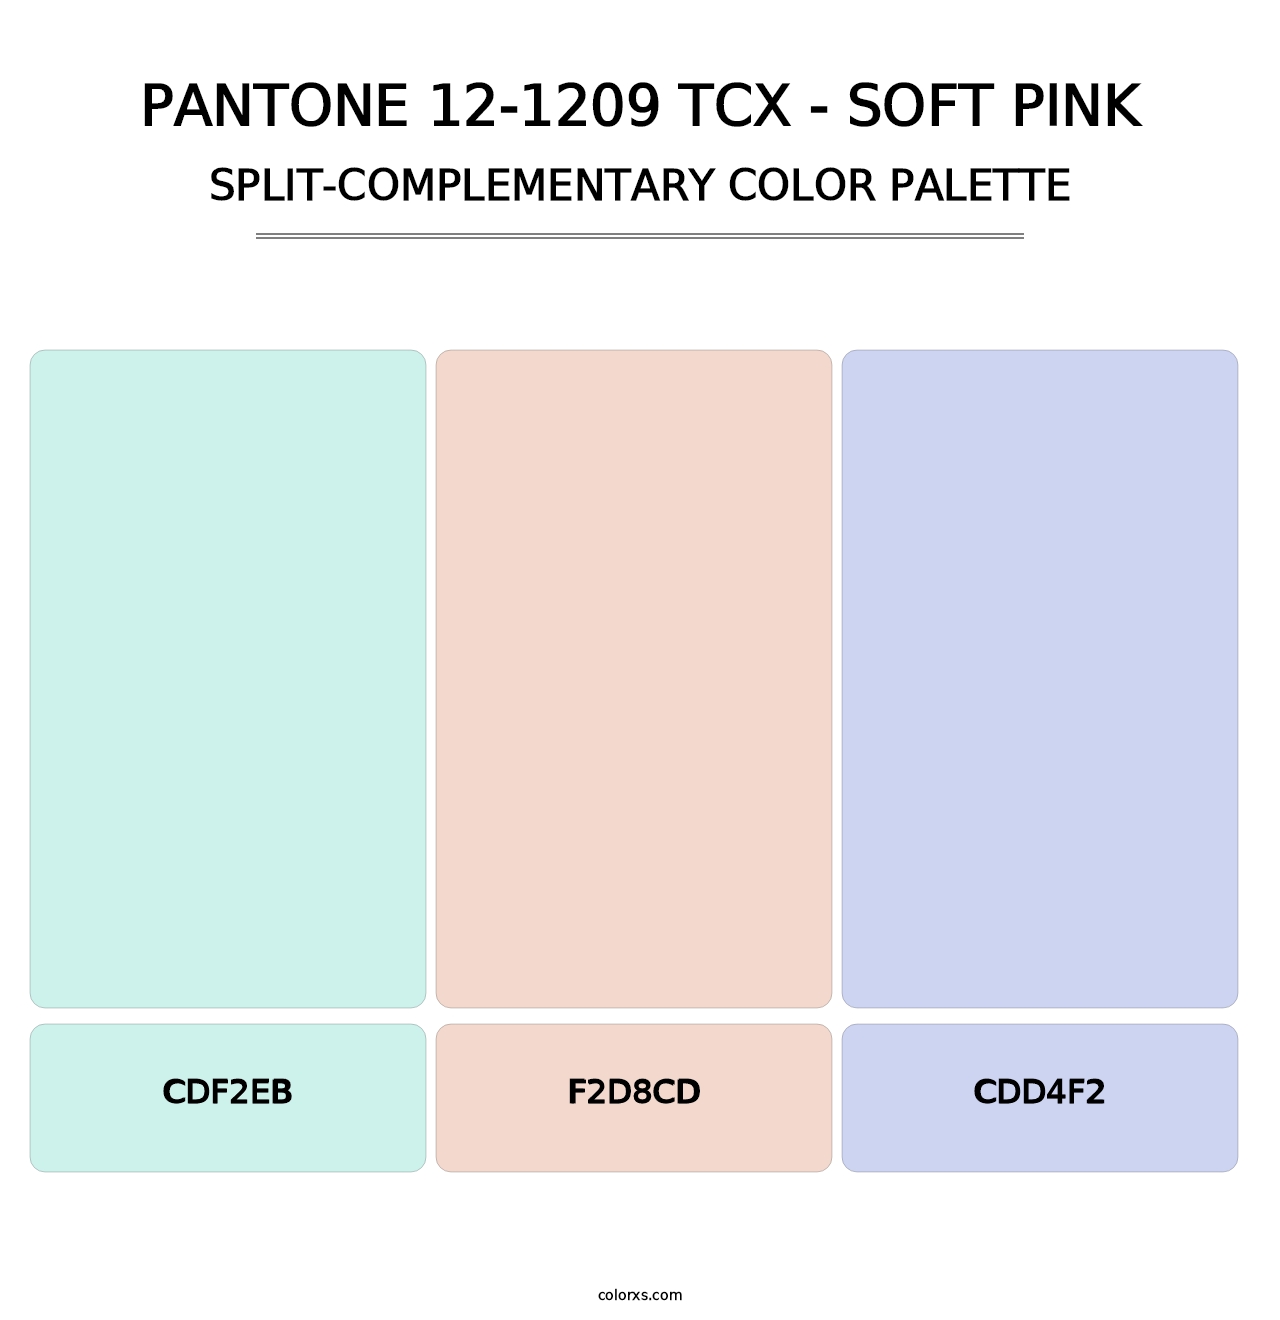 PANTONE 12-1209 TCX - Soft Pink - Split-Complementary Color Palette